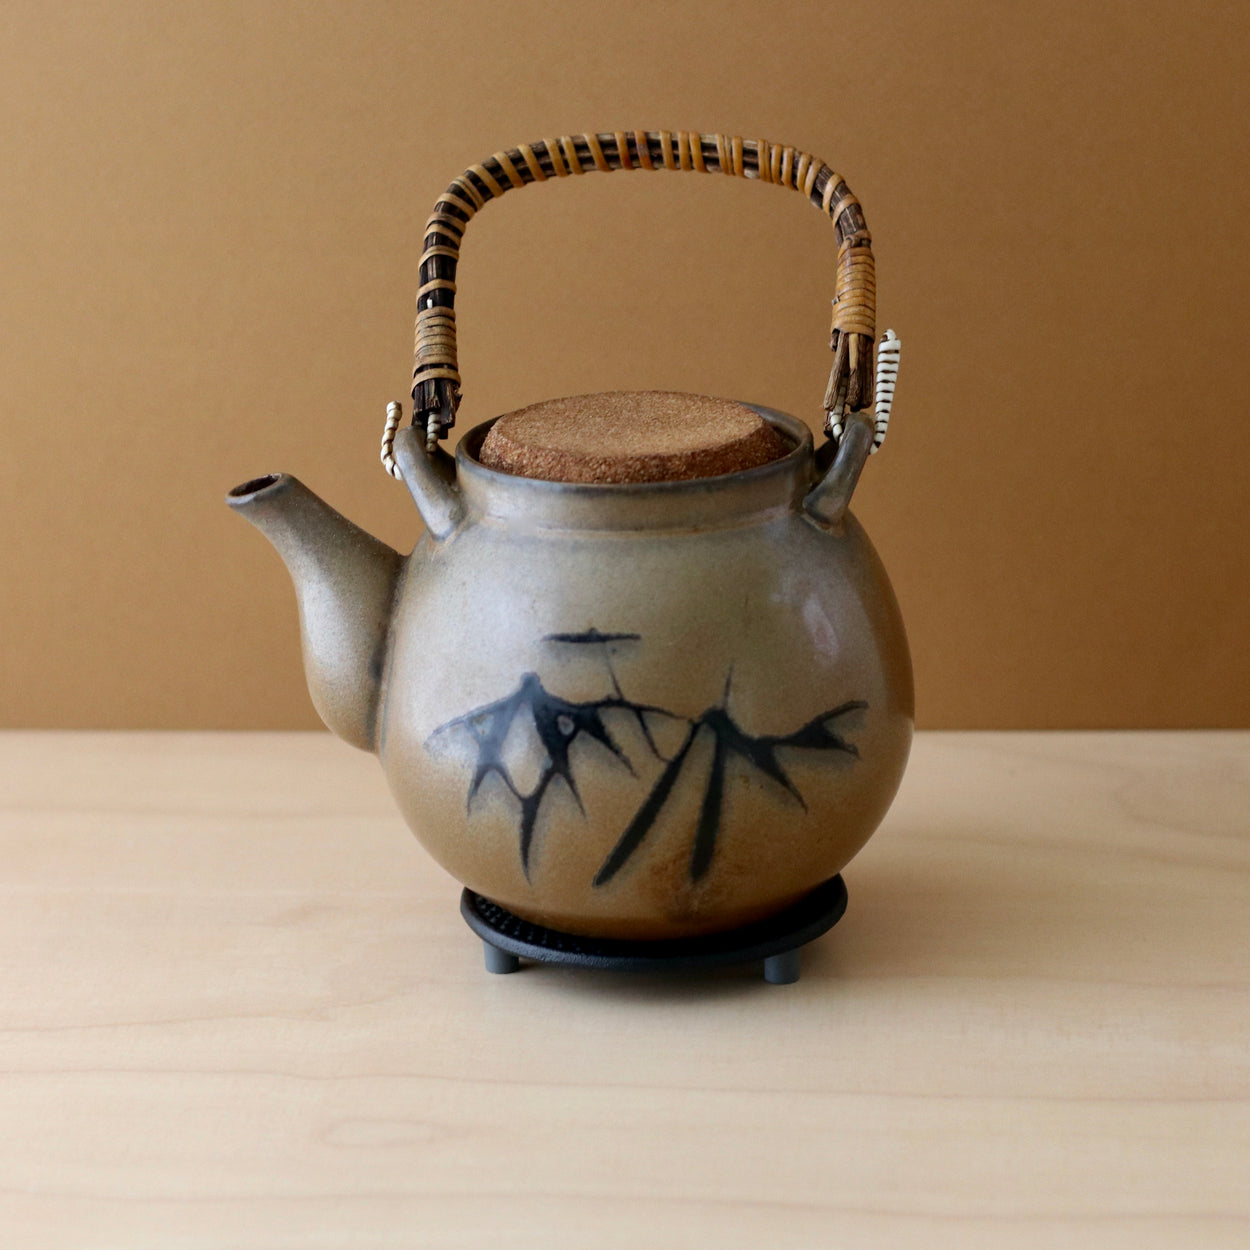 Nambu tetsuki small Japanese iron pot stand with ceramic kettle on top